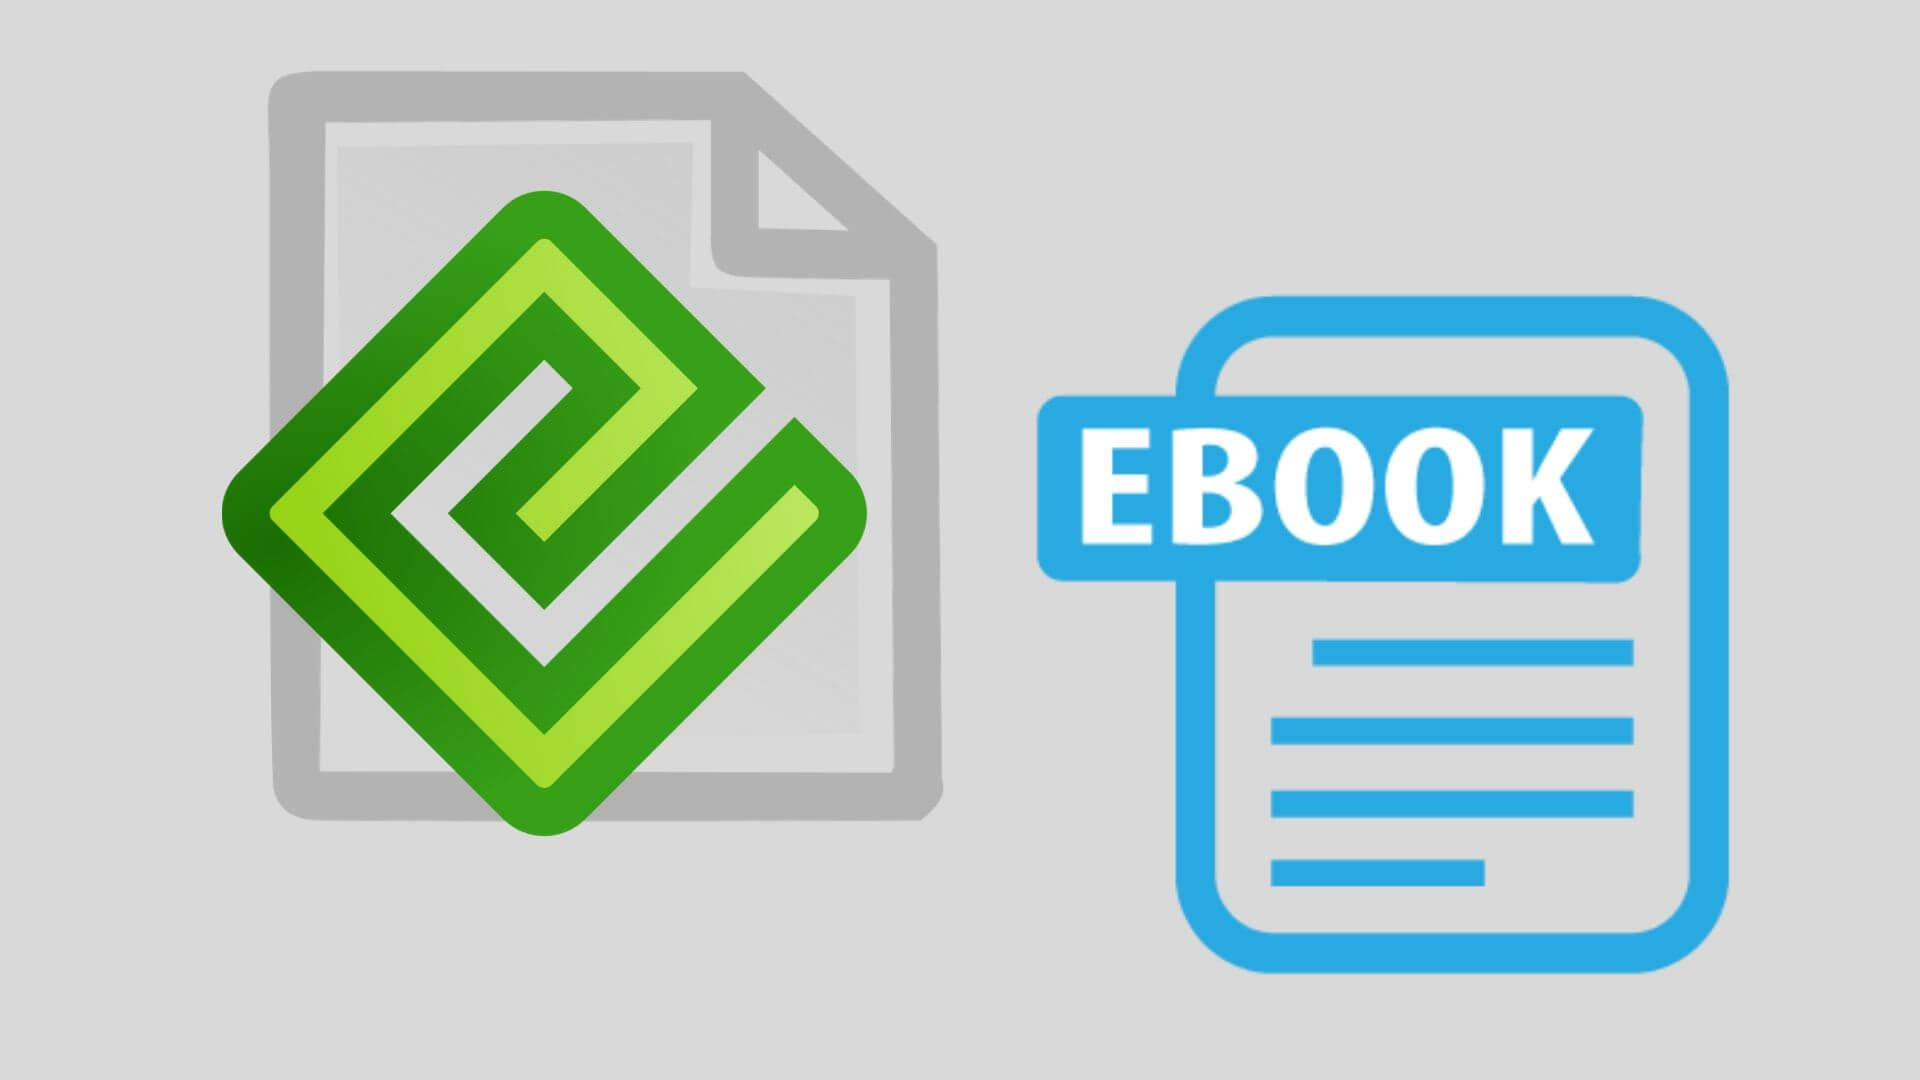 ePUB3 file Format for eBooks